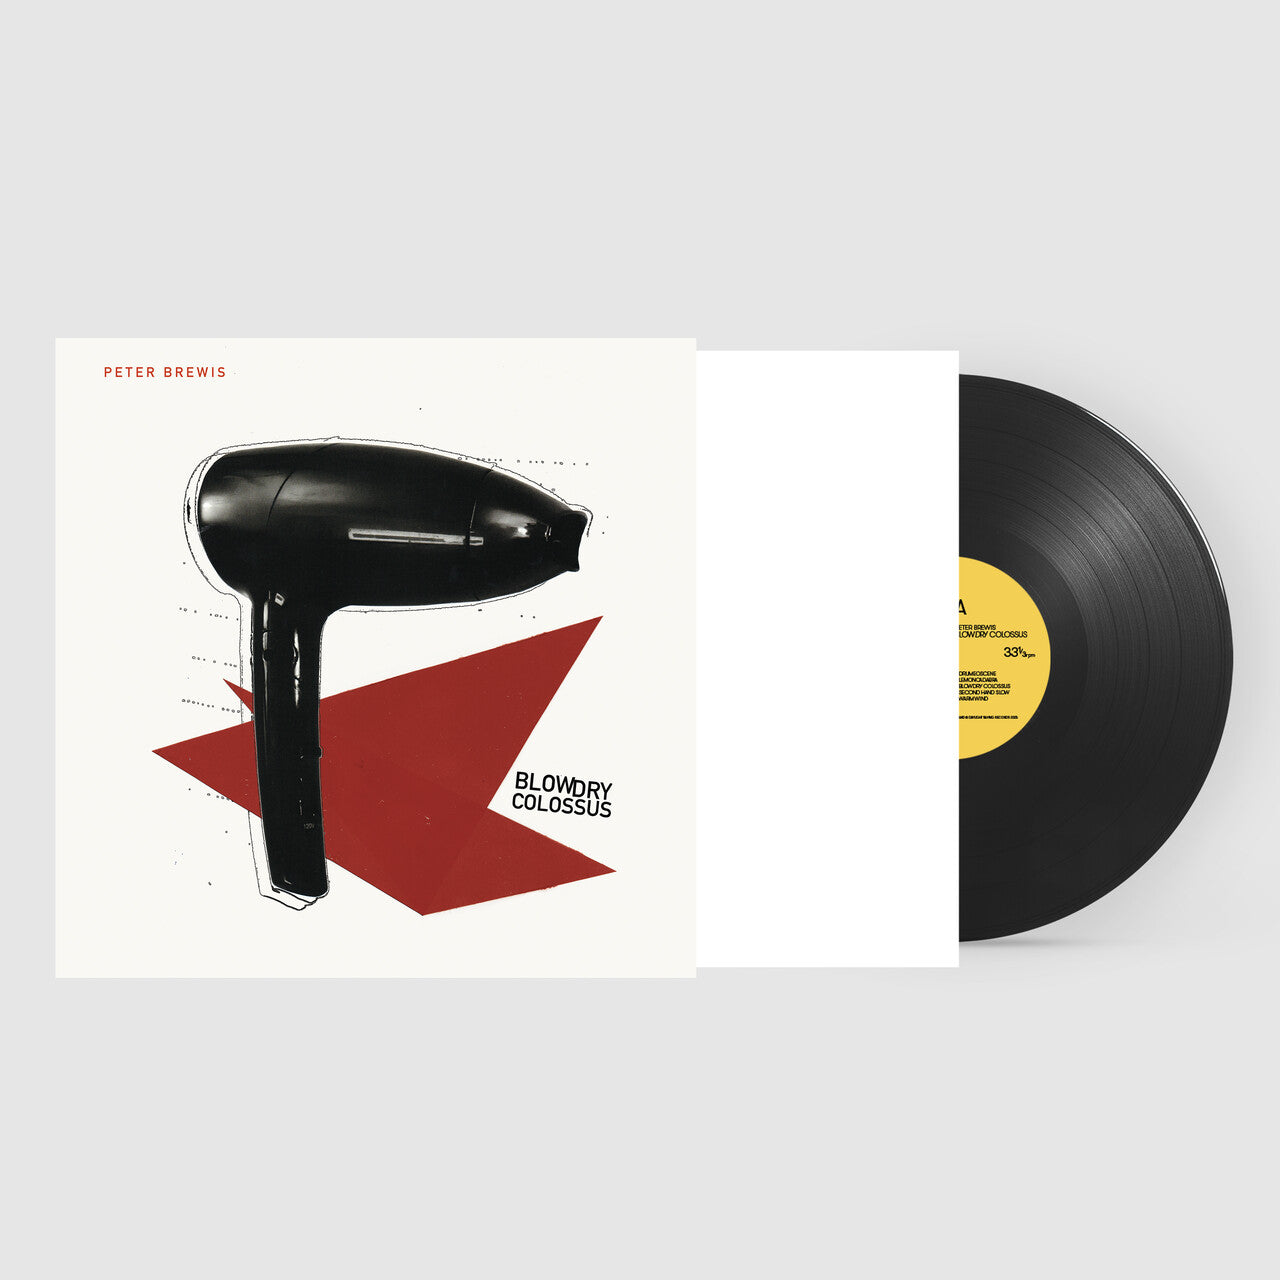 Peter Brewis - Blow Dry Colossus: Vinyl LP